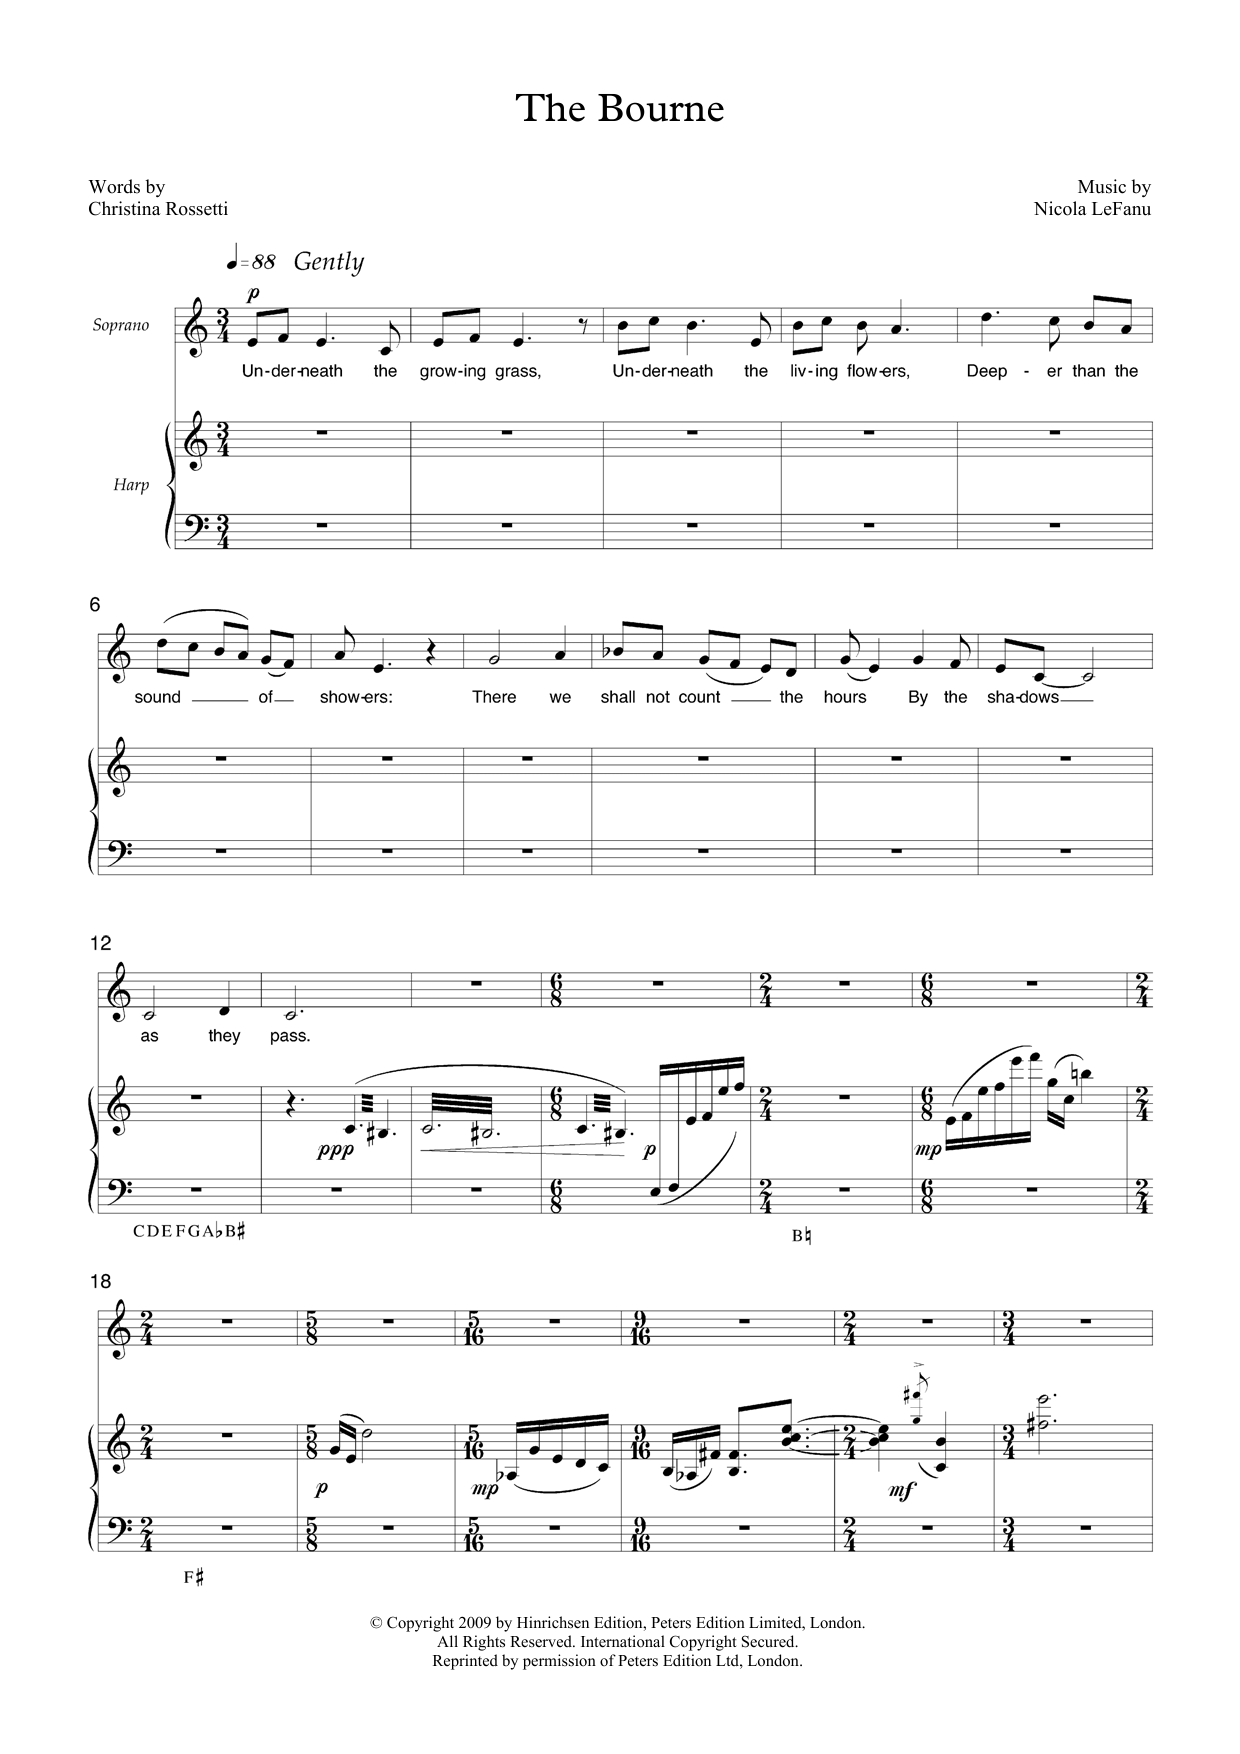 Download Nicola LeFanu The Bourne (for soprano & harp) Sheet Music